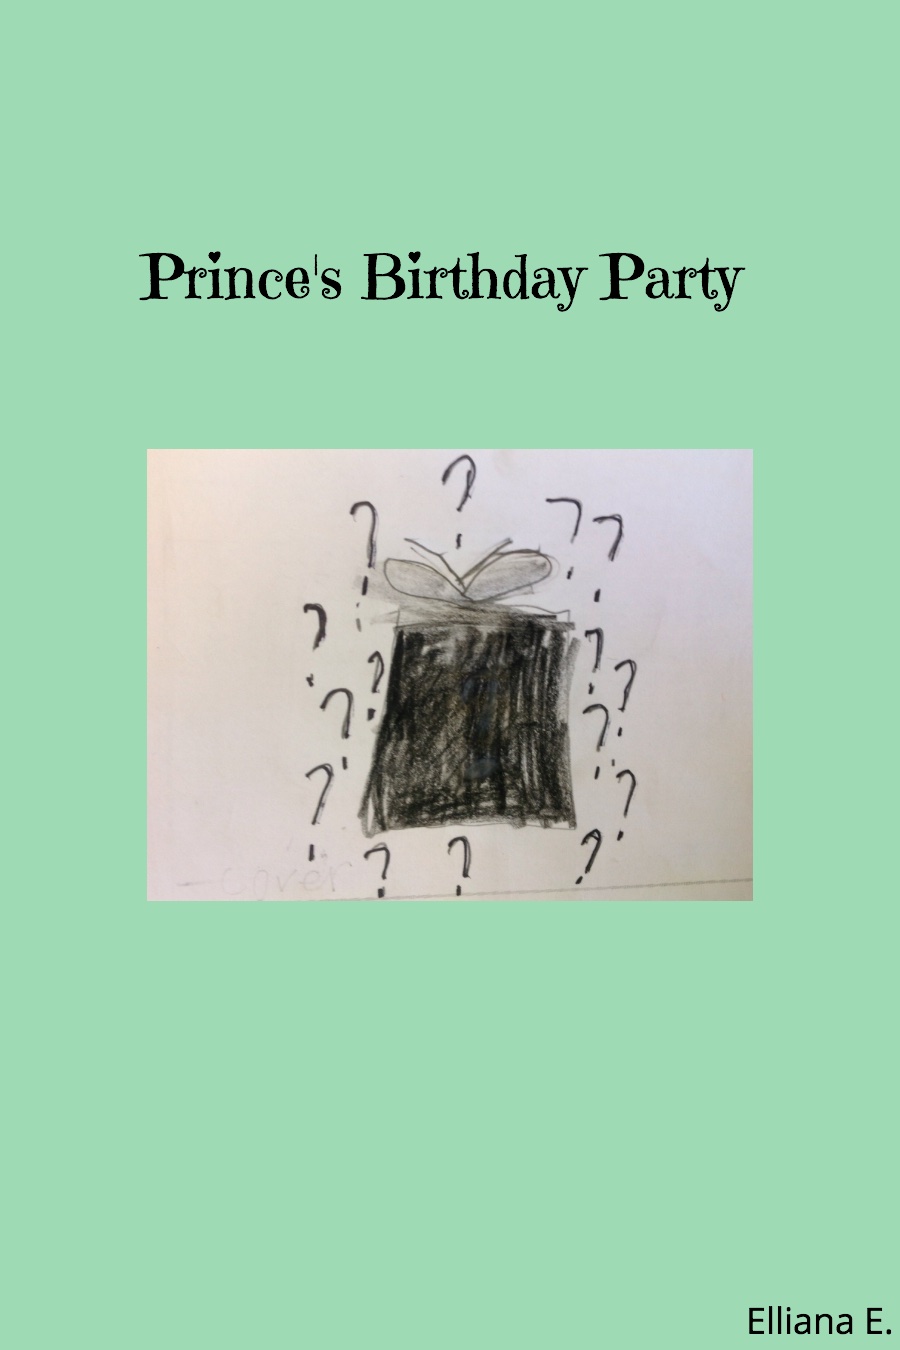 Prices Birthday Party by Elliana E